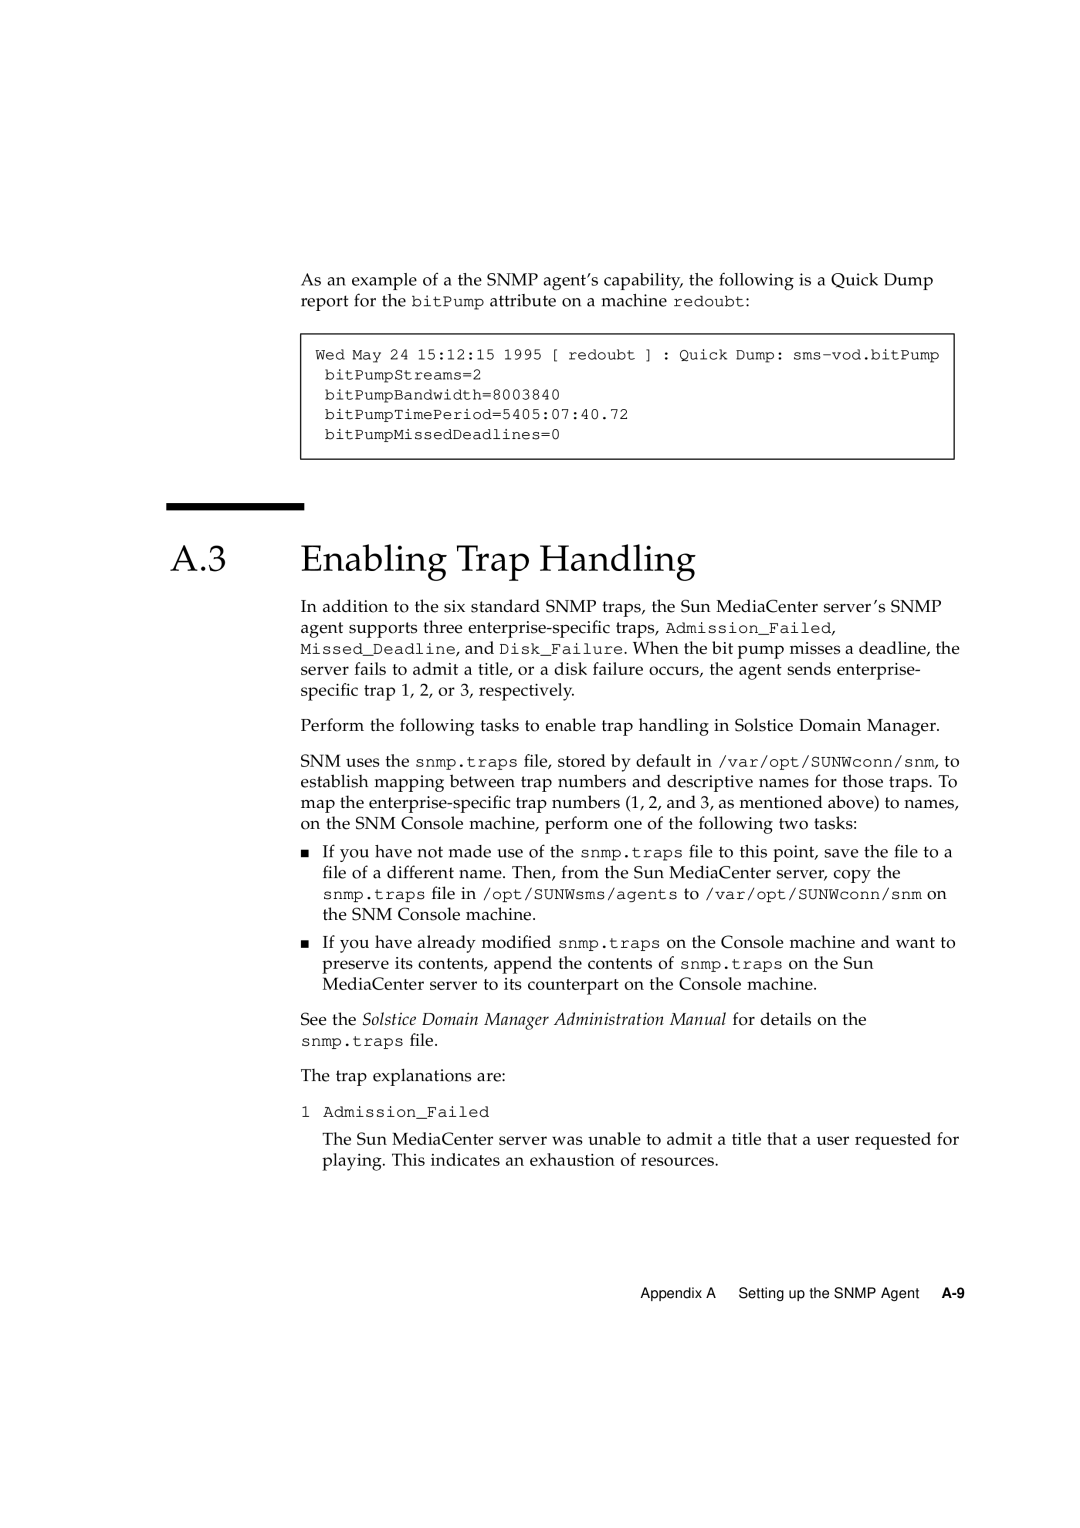 Sun Microsystems 2.1 manual A.3 Enabling Trap Handling 